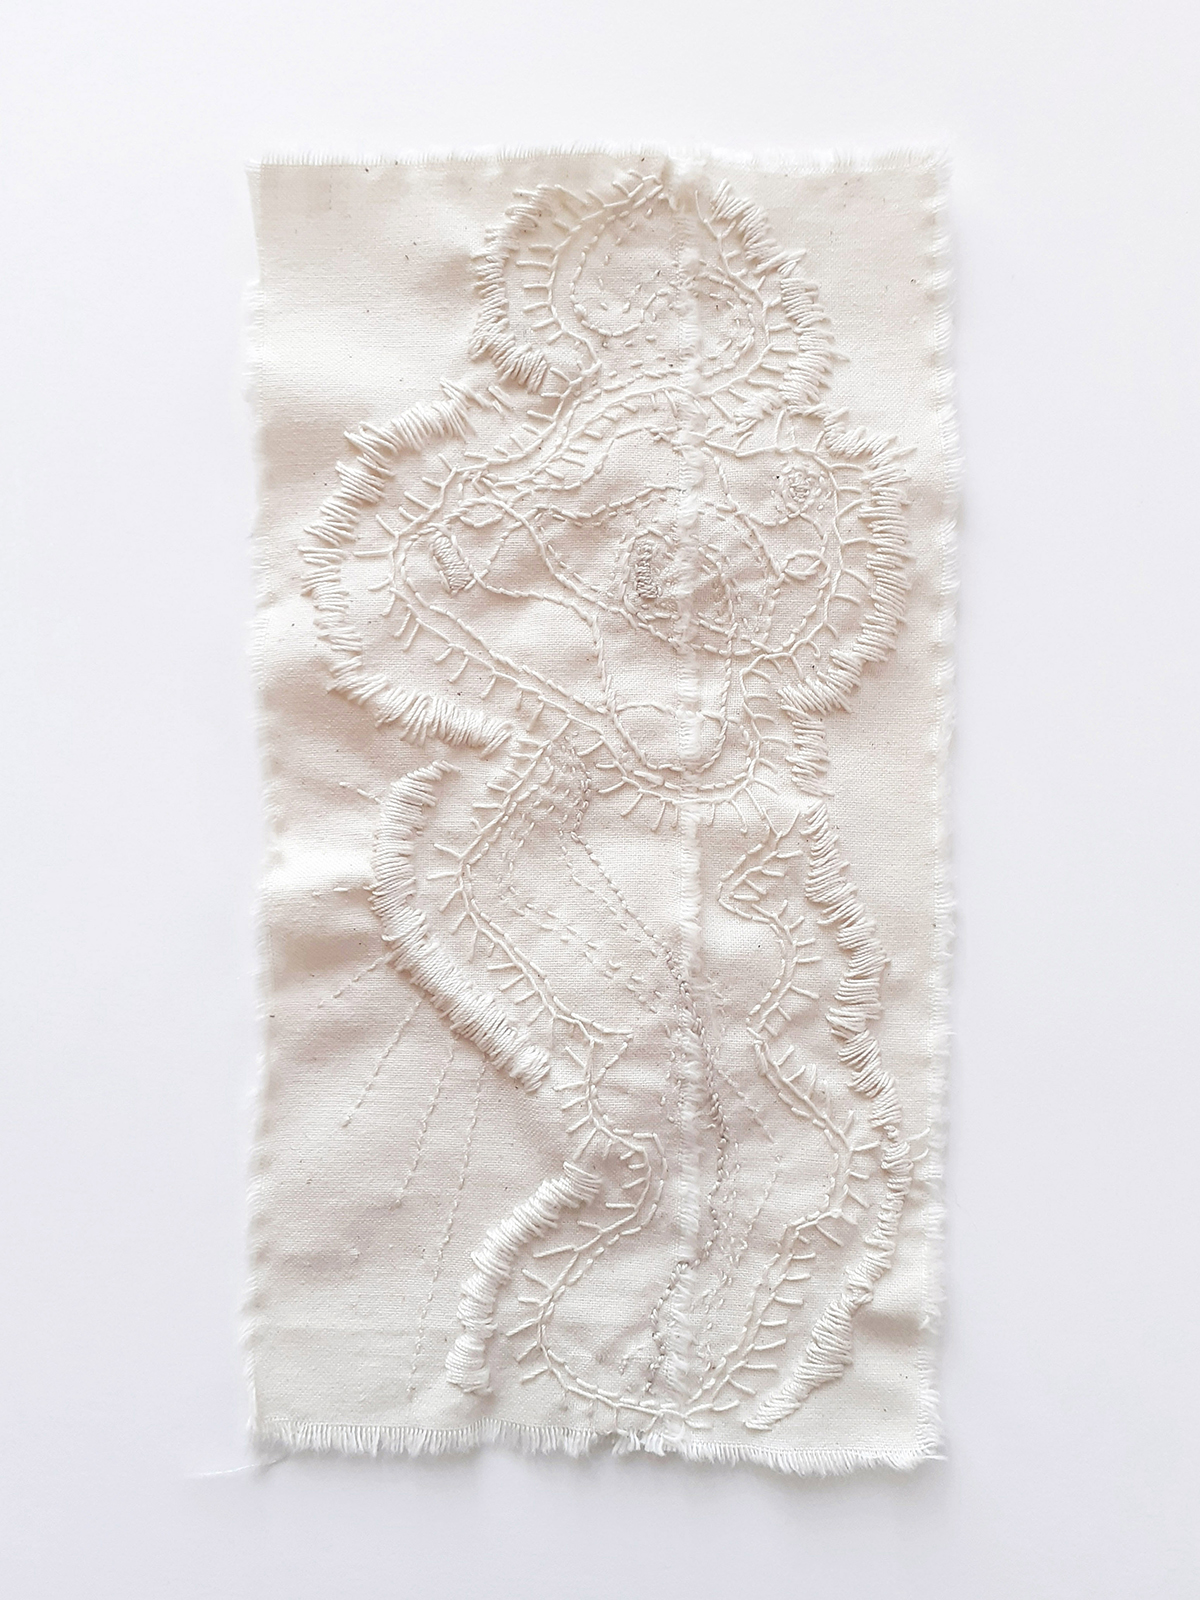 monochrome contemporary embroidery artwork